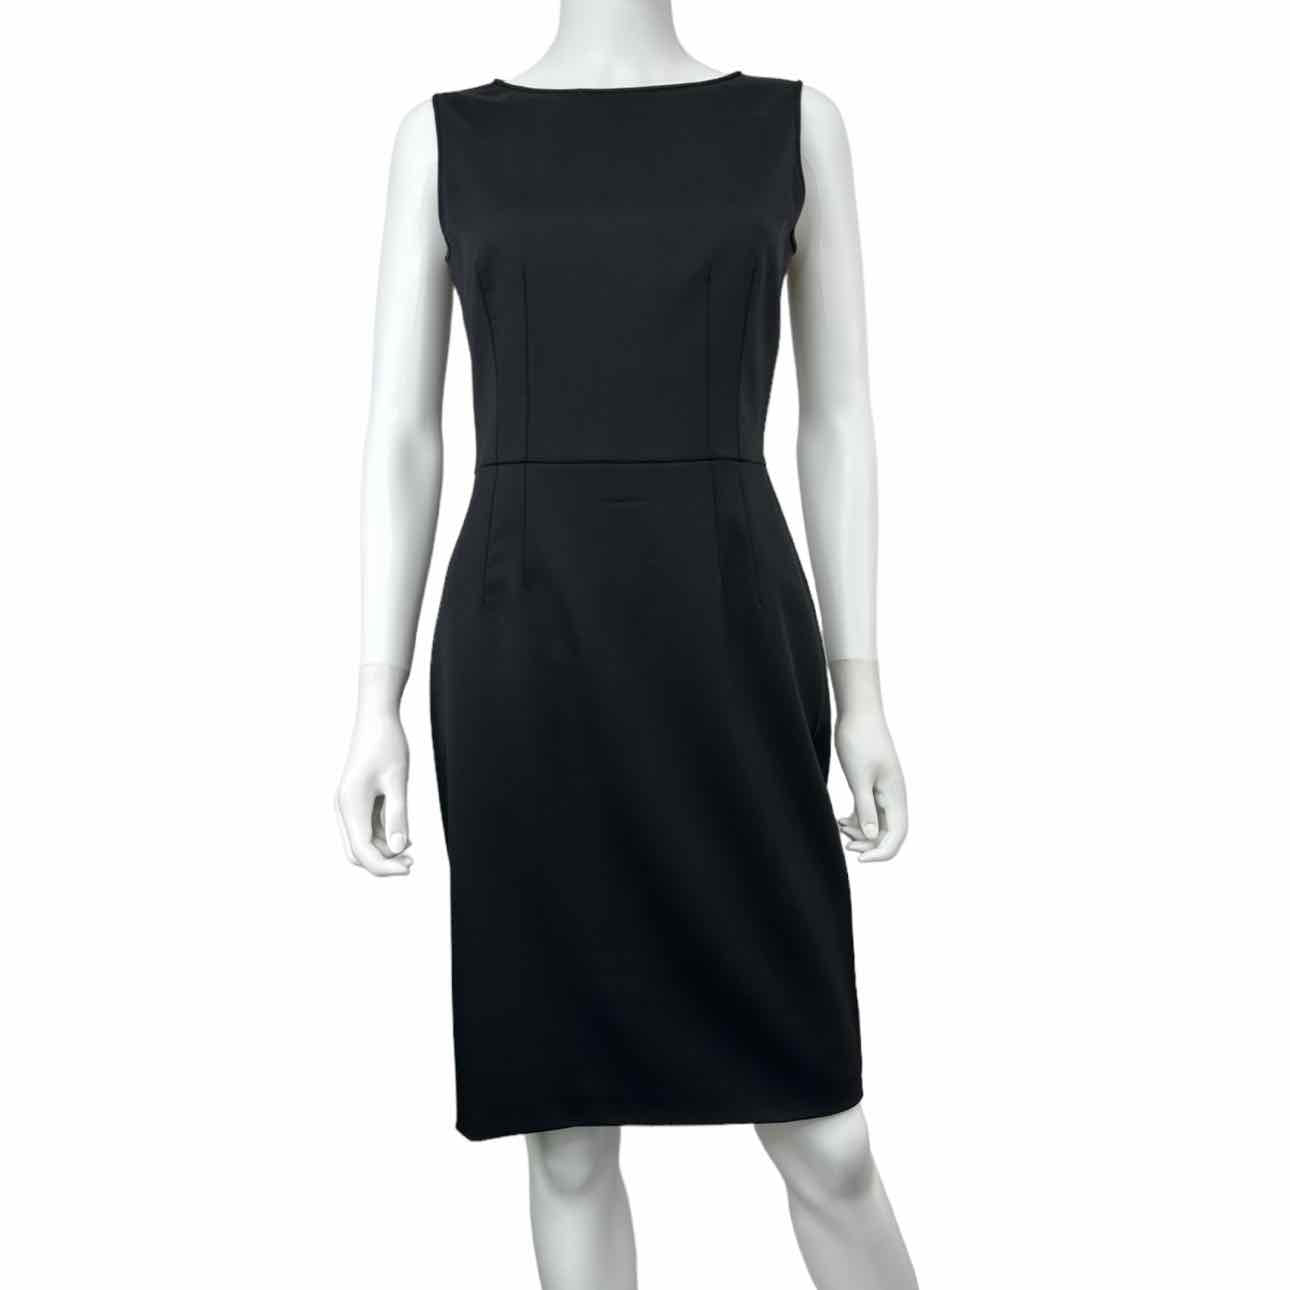 VALENTINO TECHNOCOUTURE Black 2 Piece Dress and Jacket, black sleeveless dress